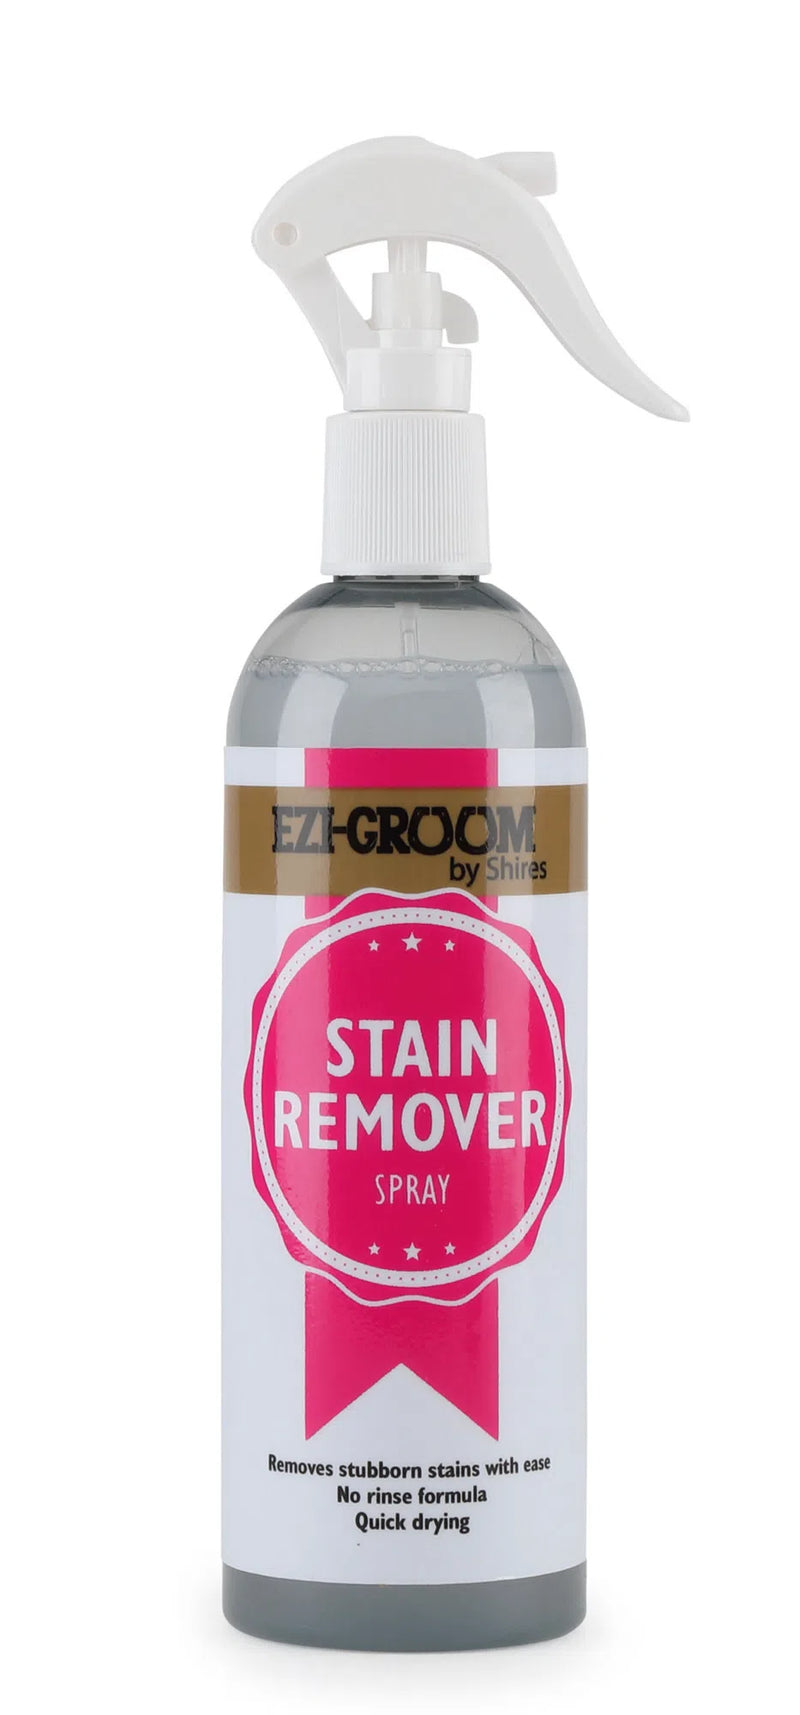 EZI-Groom Stain Remover